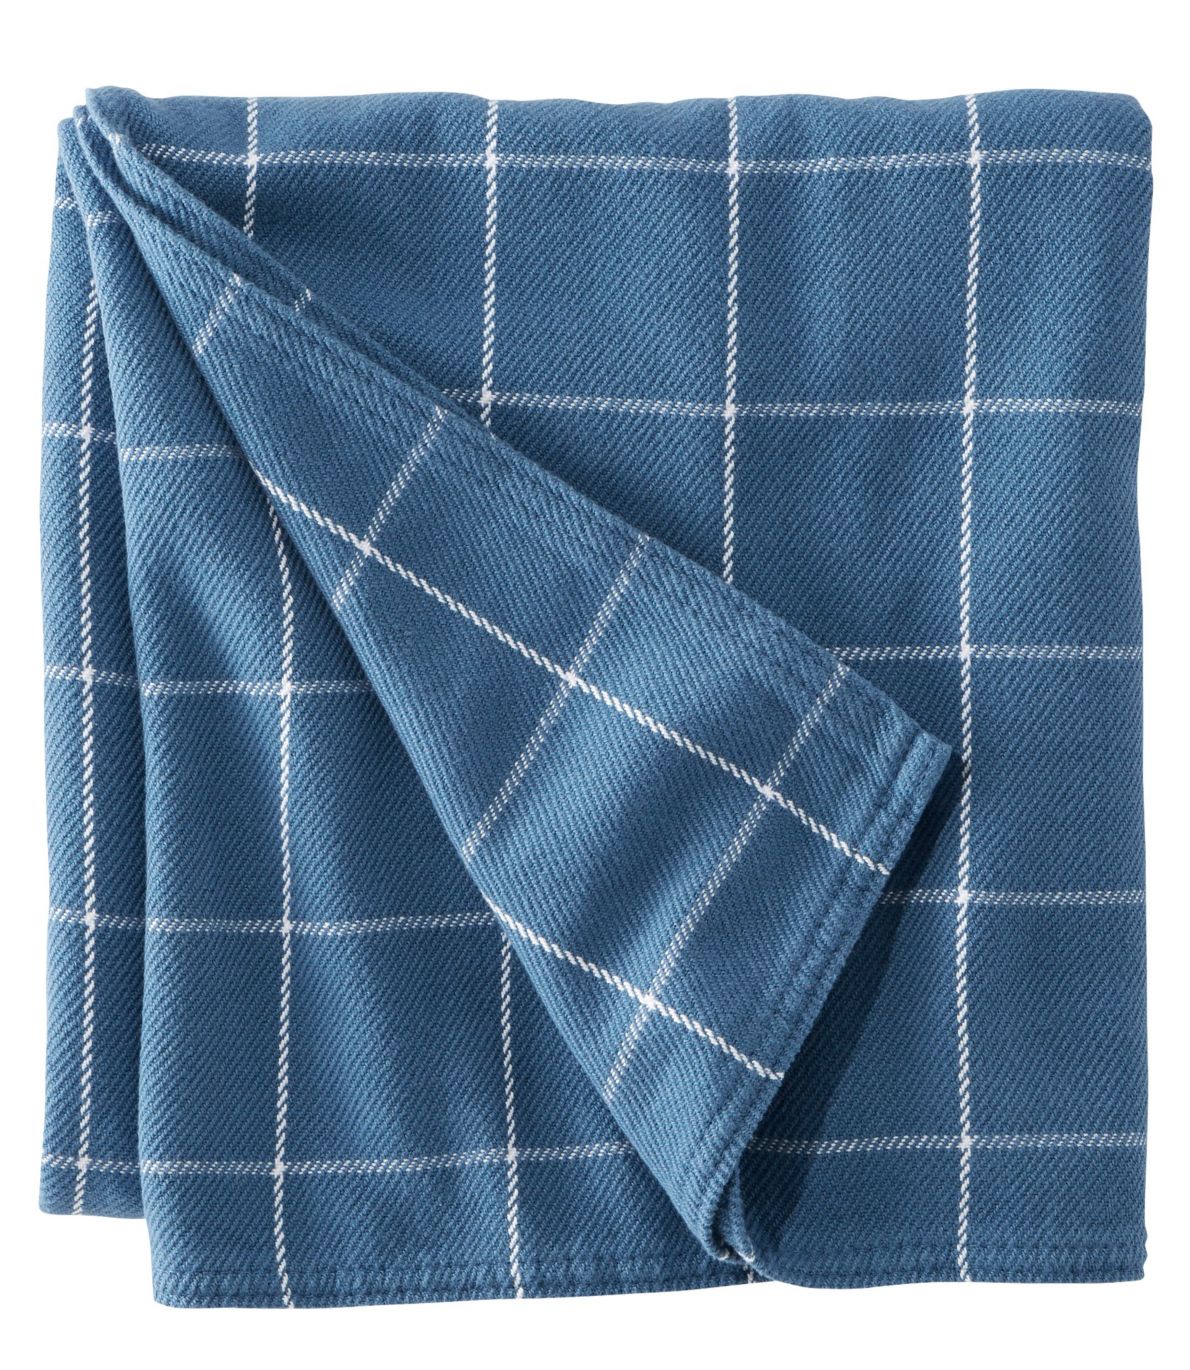 Maine-Made Cotton Blanket, Windowpane